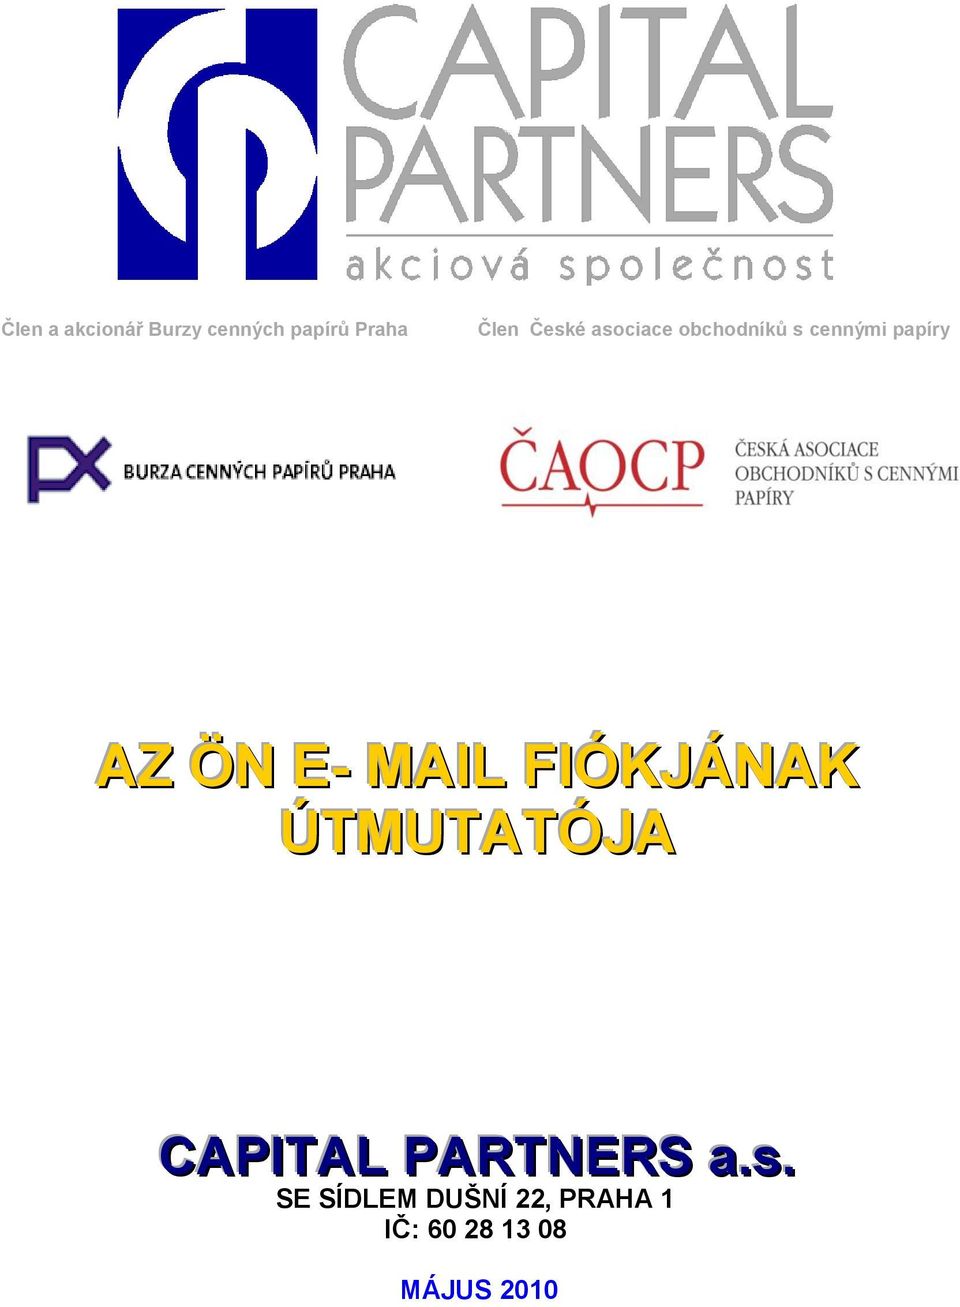 E- MAIL FIÓKJÁNAK ÚTMUTATÓJA CAPITAL PARTNERS a.s.